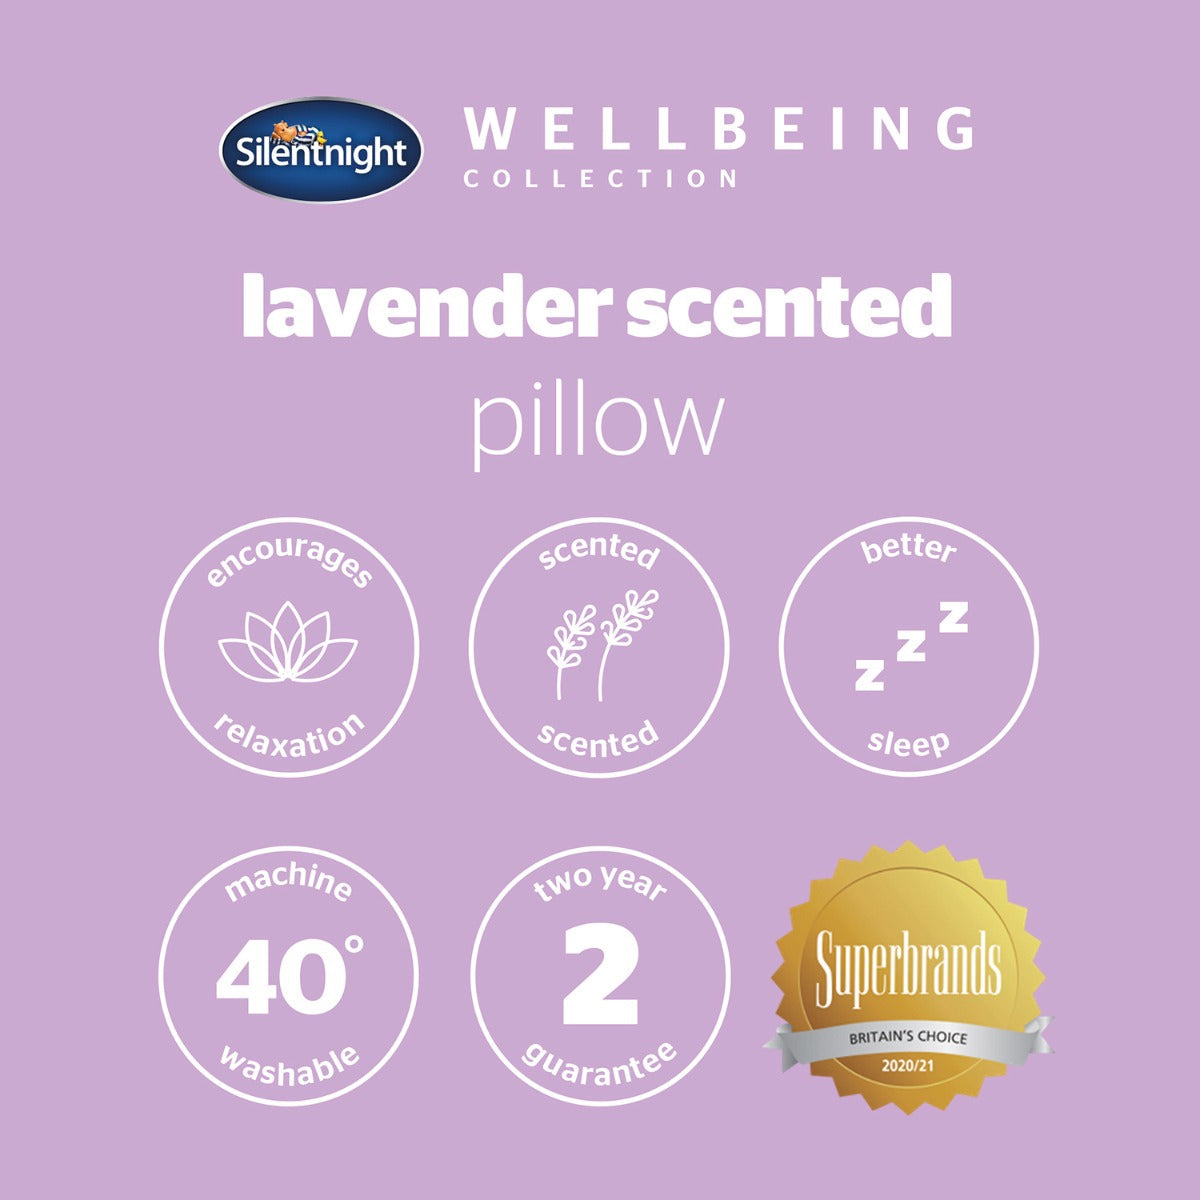 Silentnight Wellbeing Lavender Scented Pillow - Medium Support